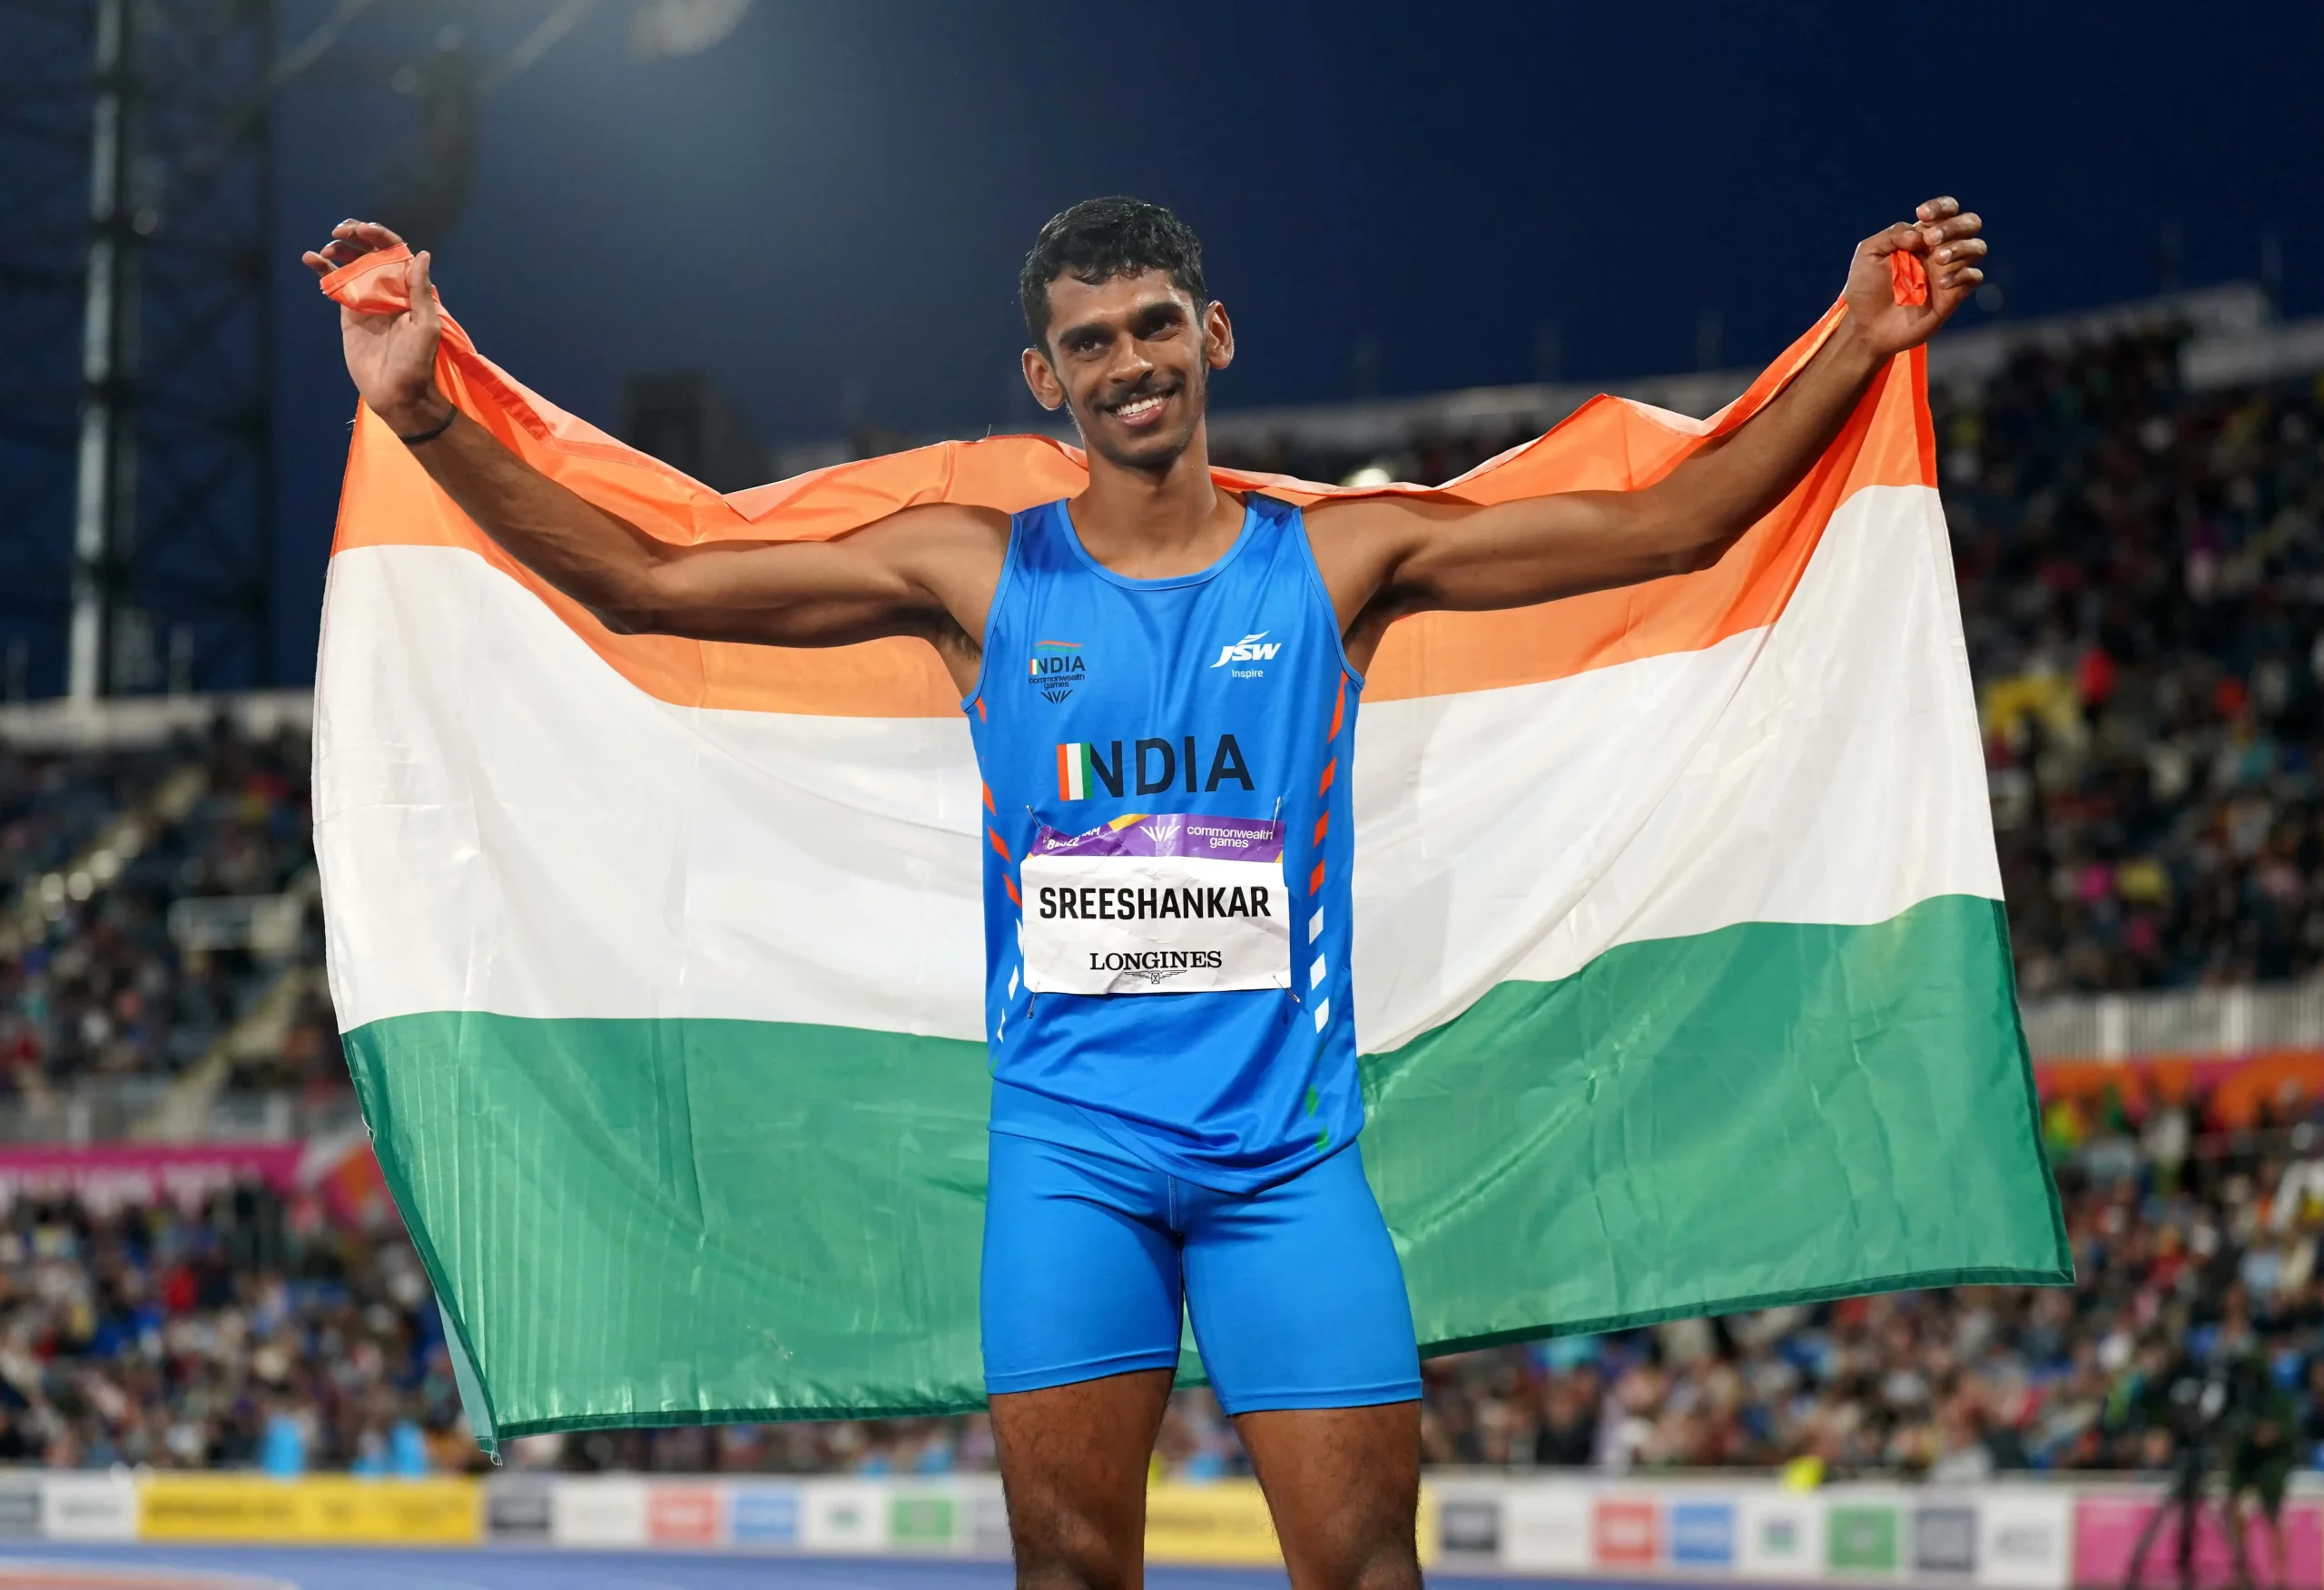 Murali Sreeshankar: India’s Emerging Athletics Star